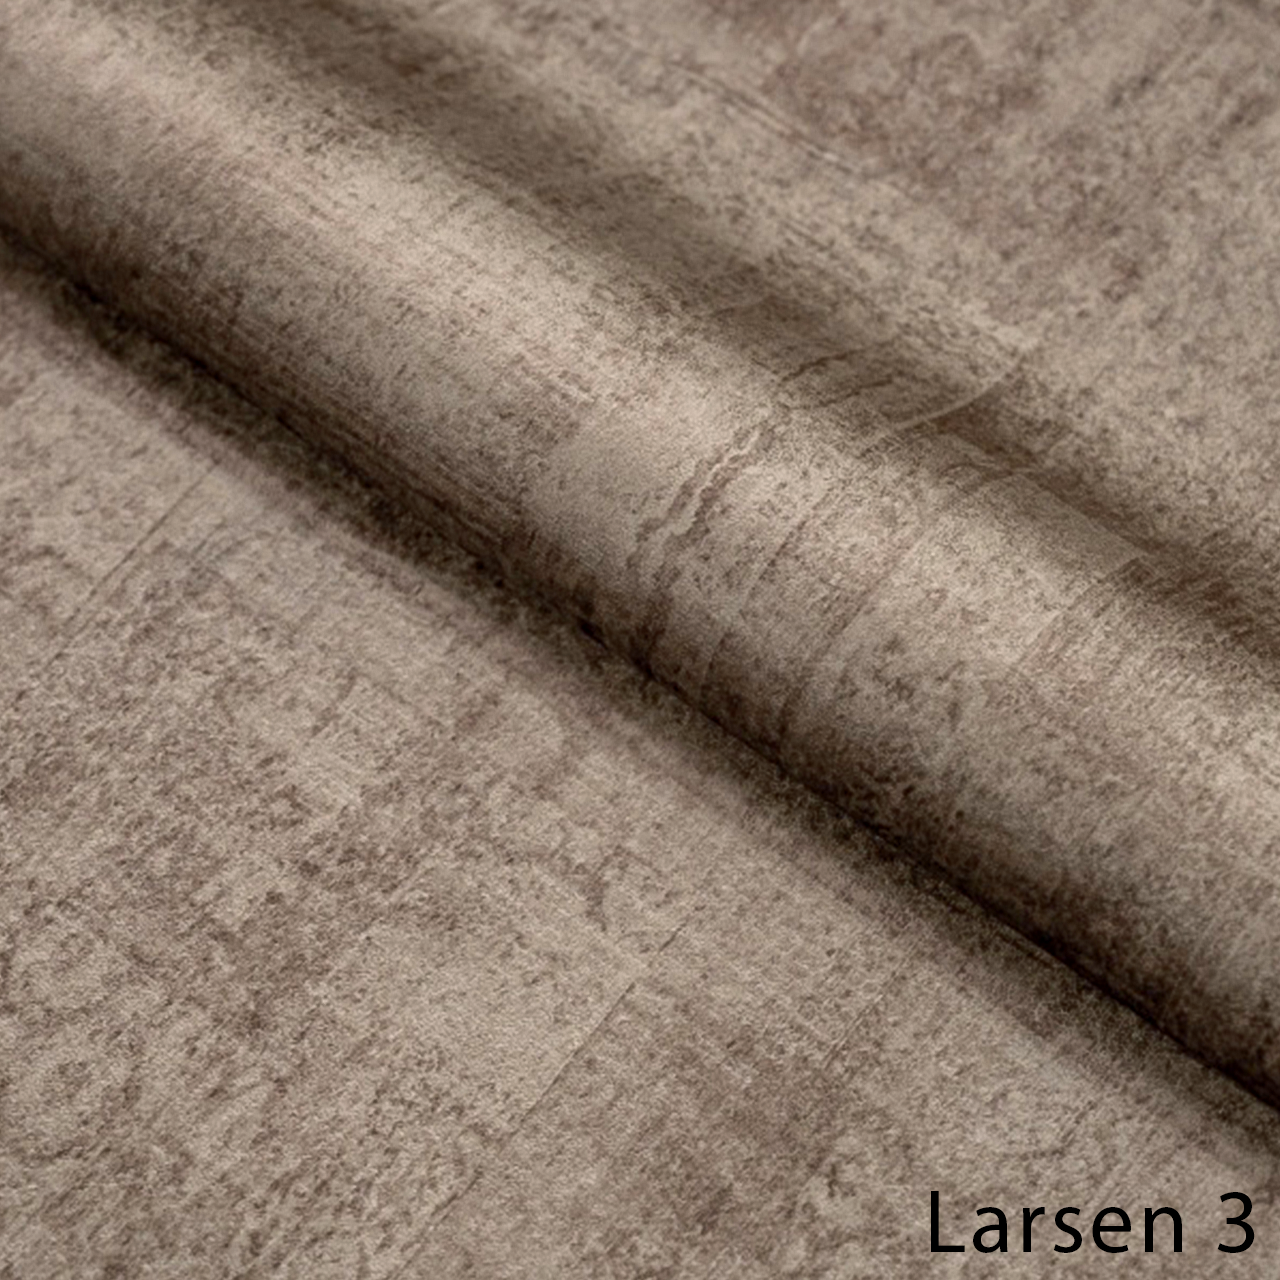 Larsen 3